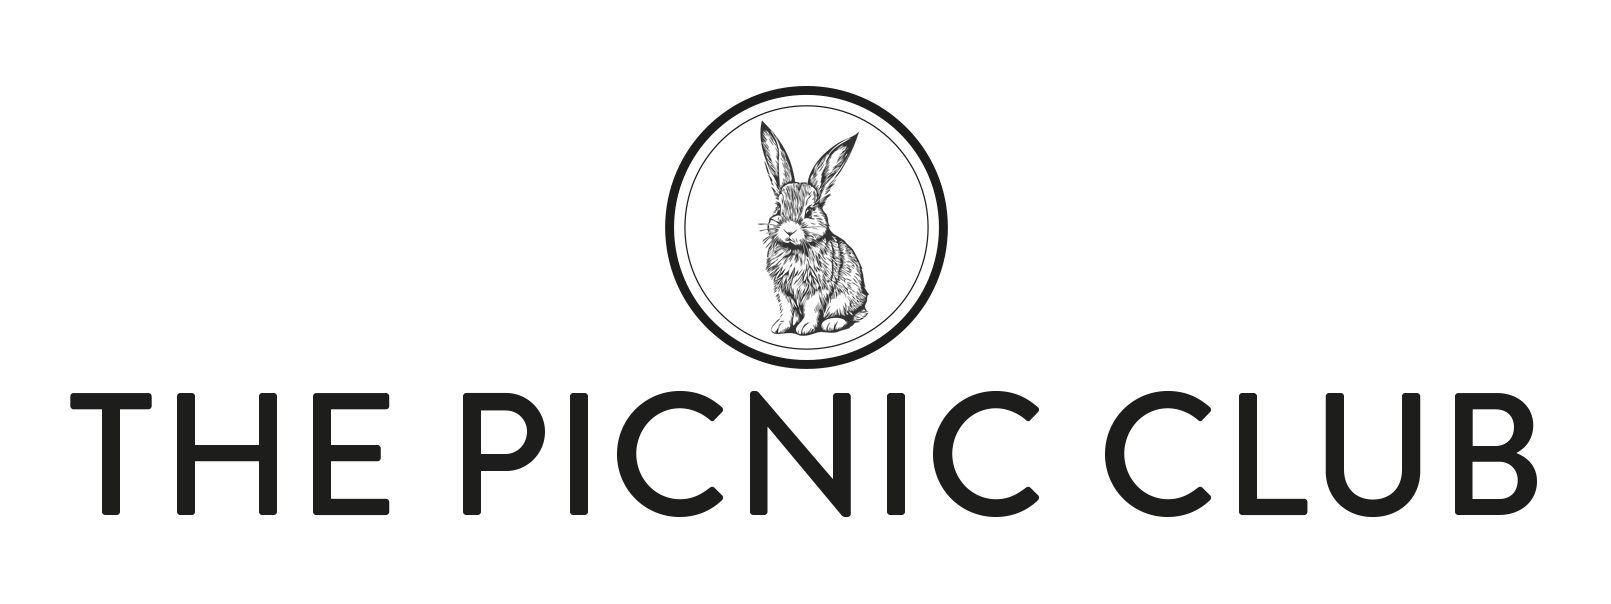 The PicNic Club